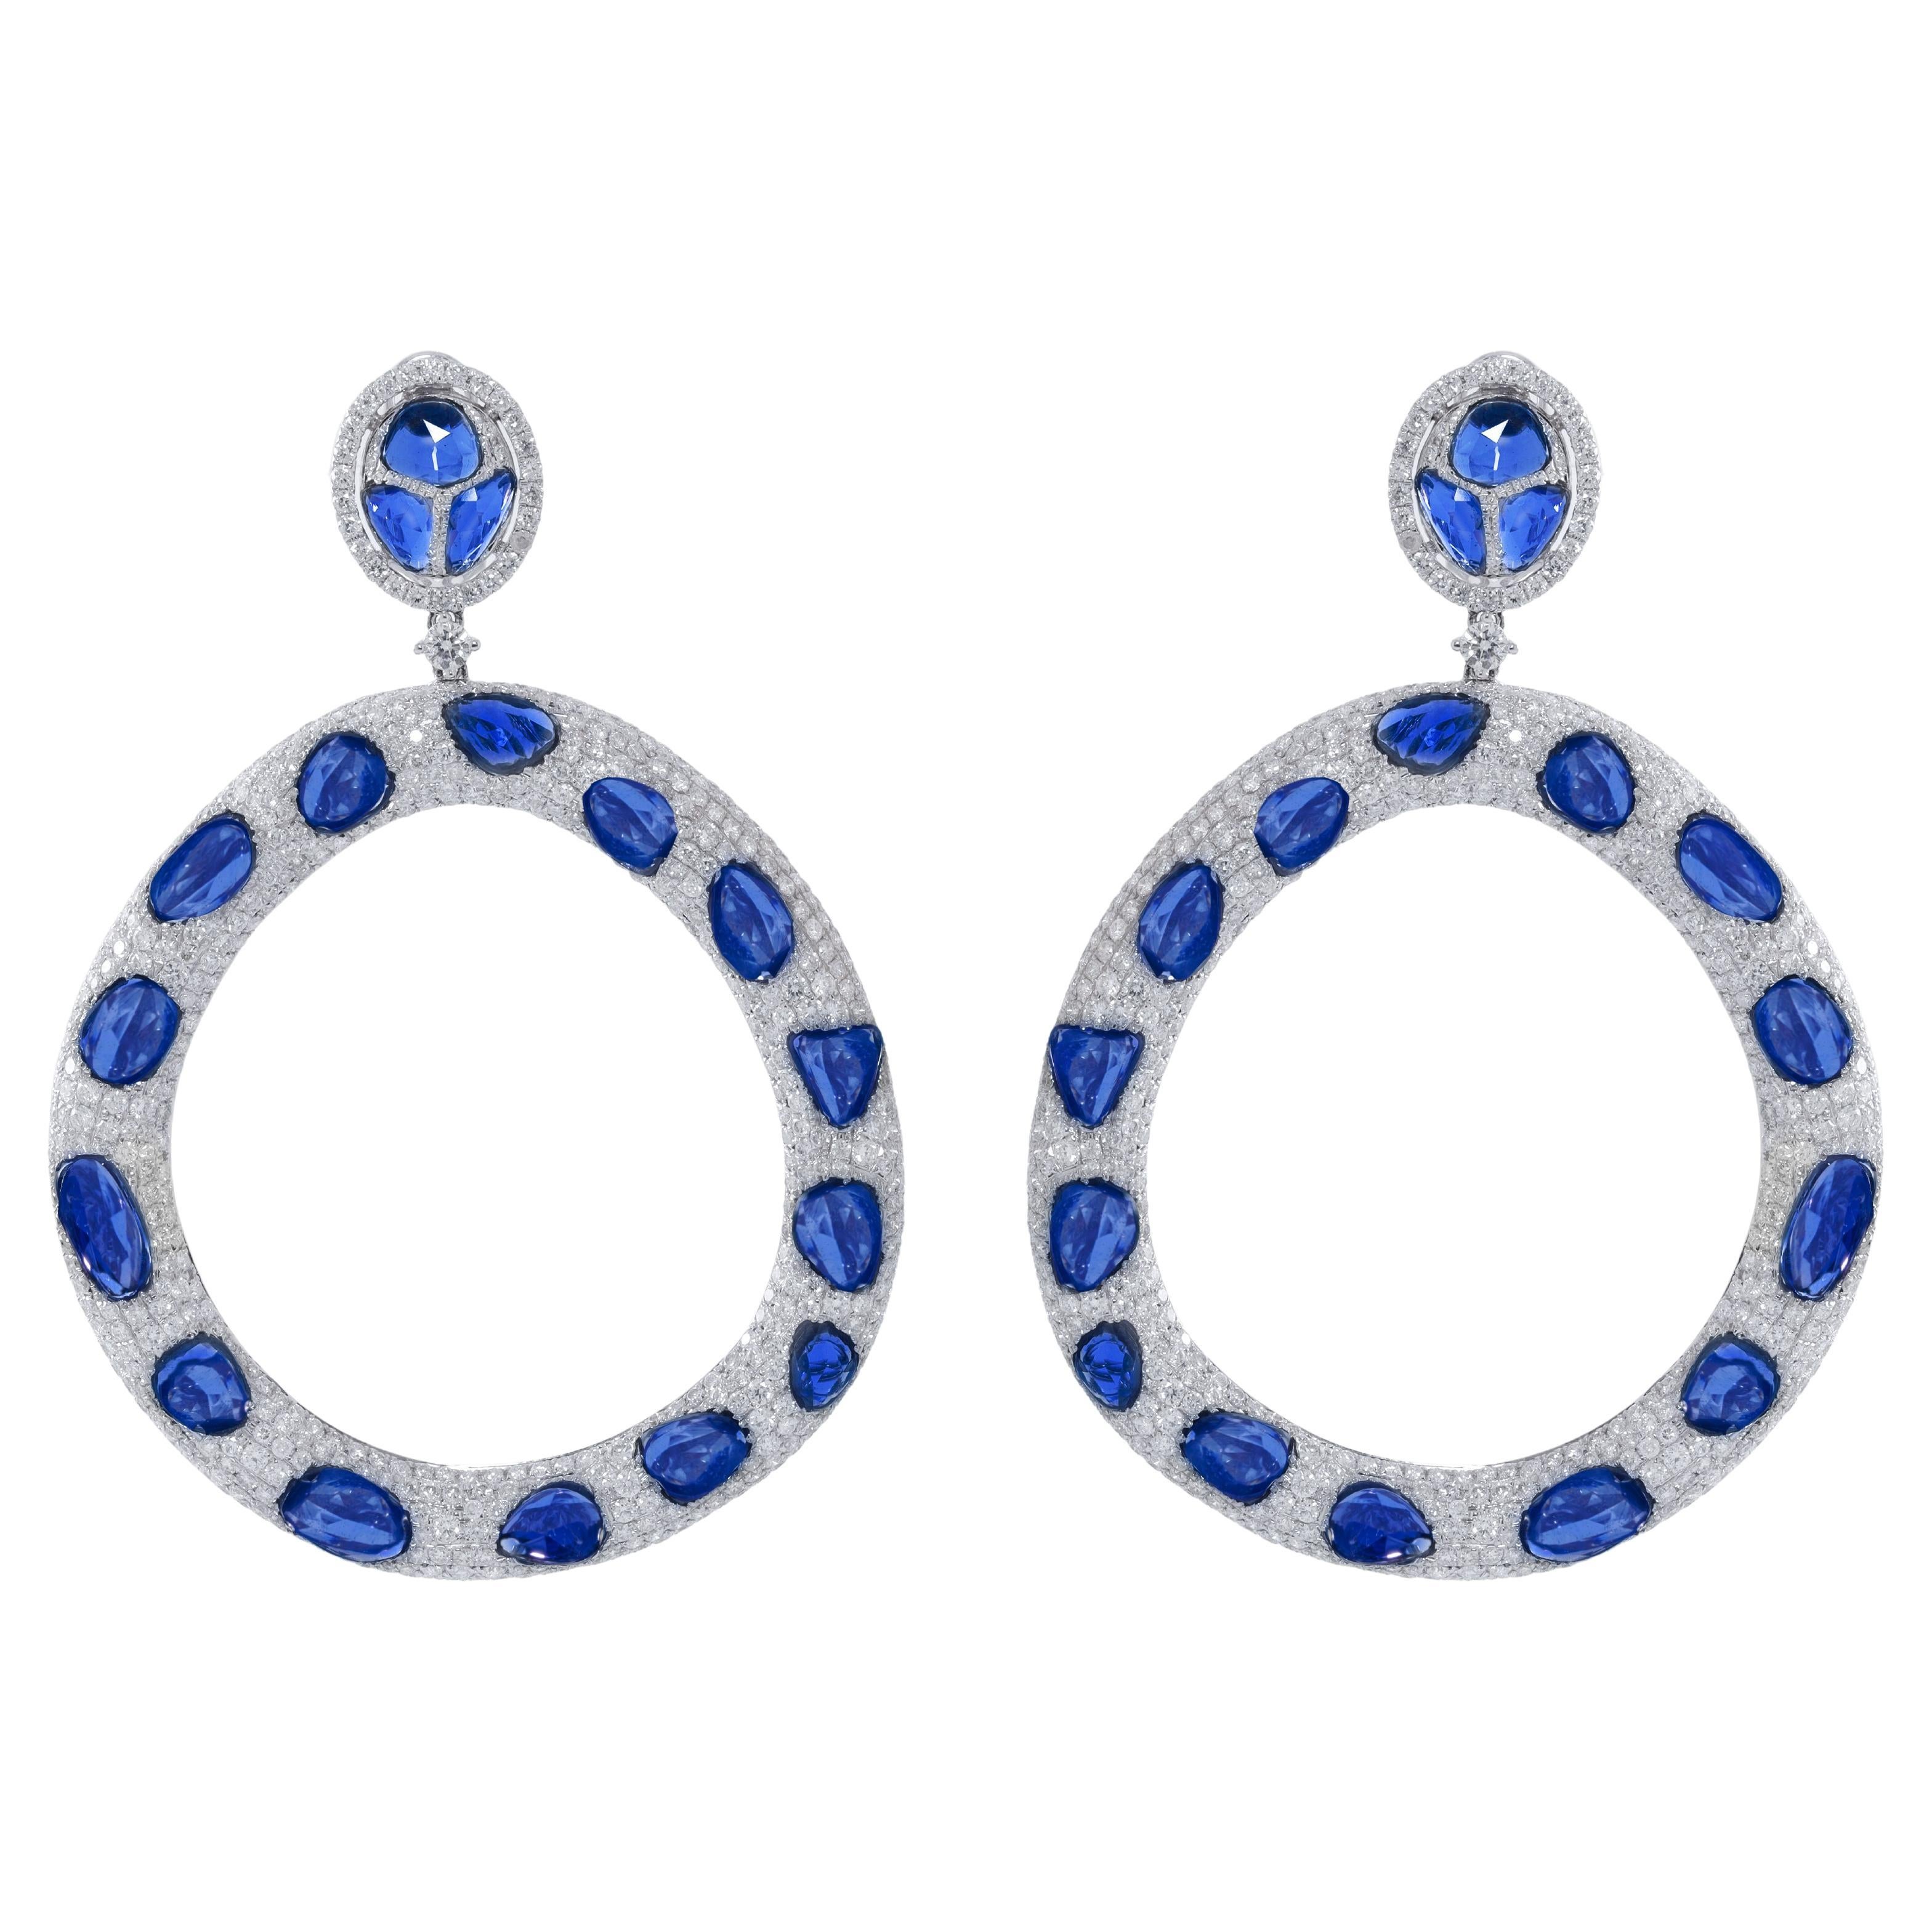 Diana M. 18.78 Carat Sapphire and Diamond Earrings